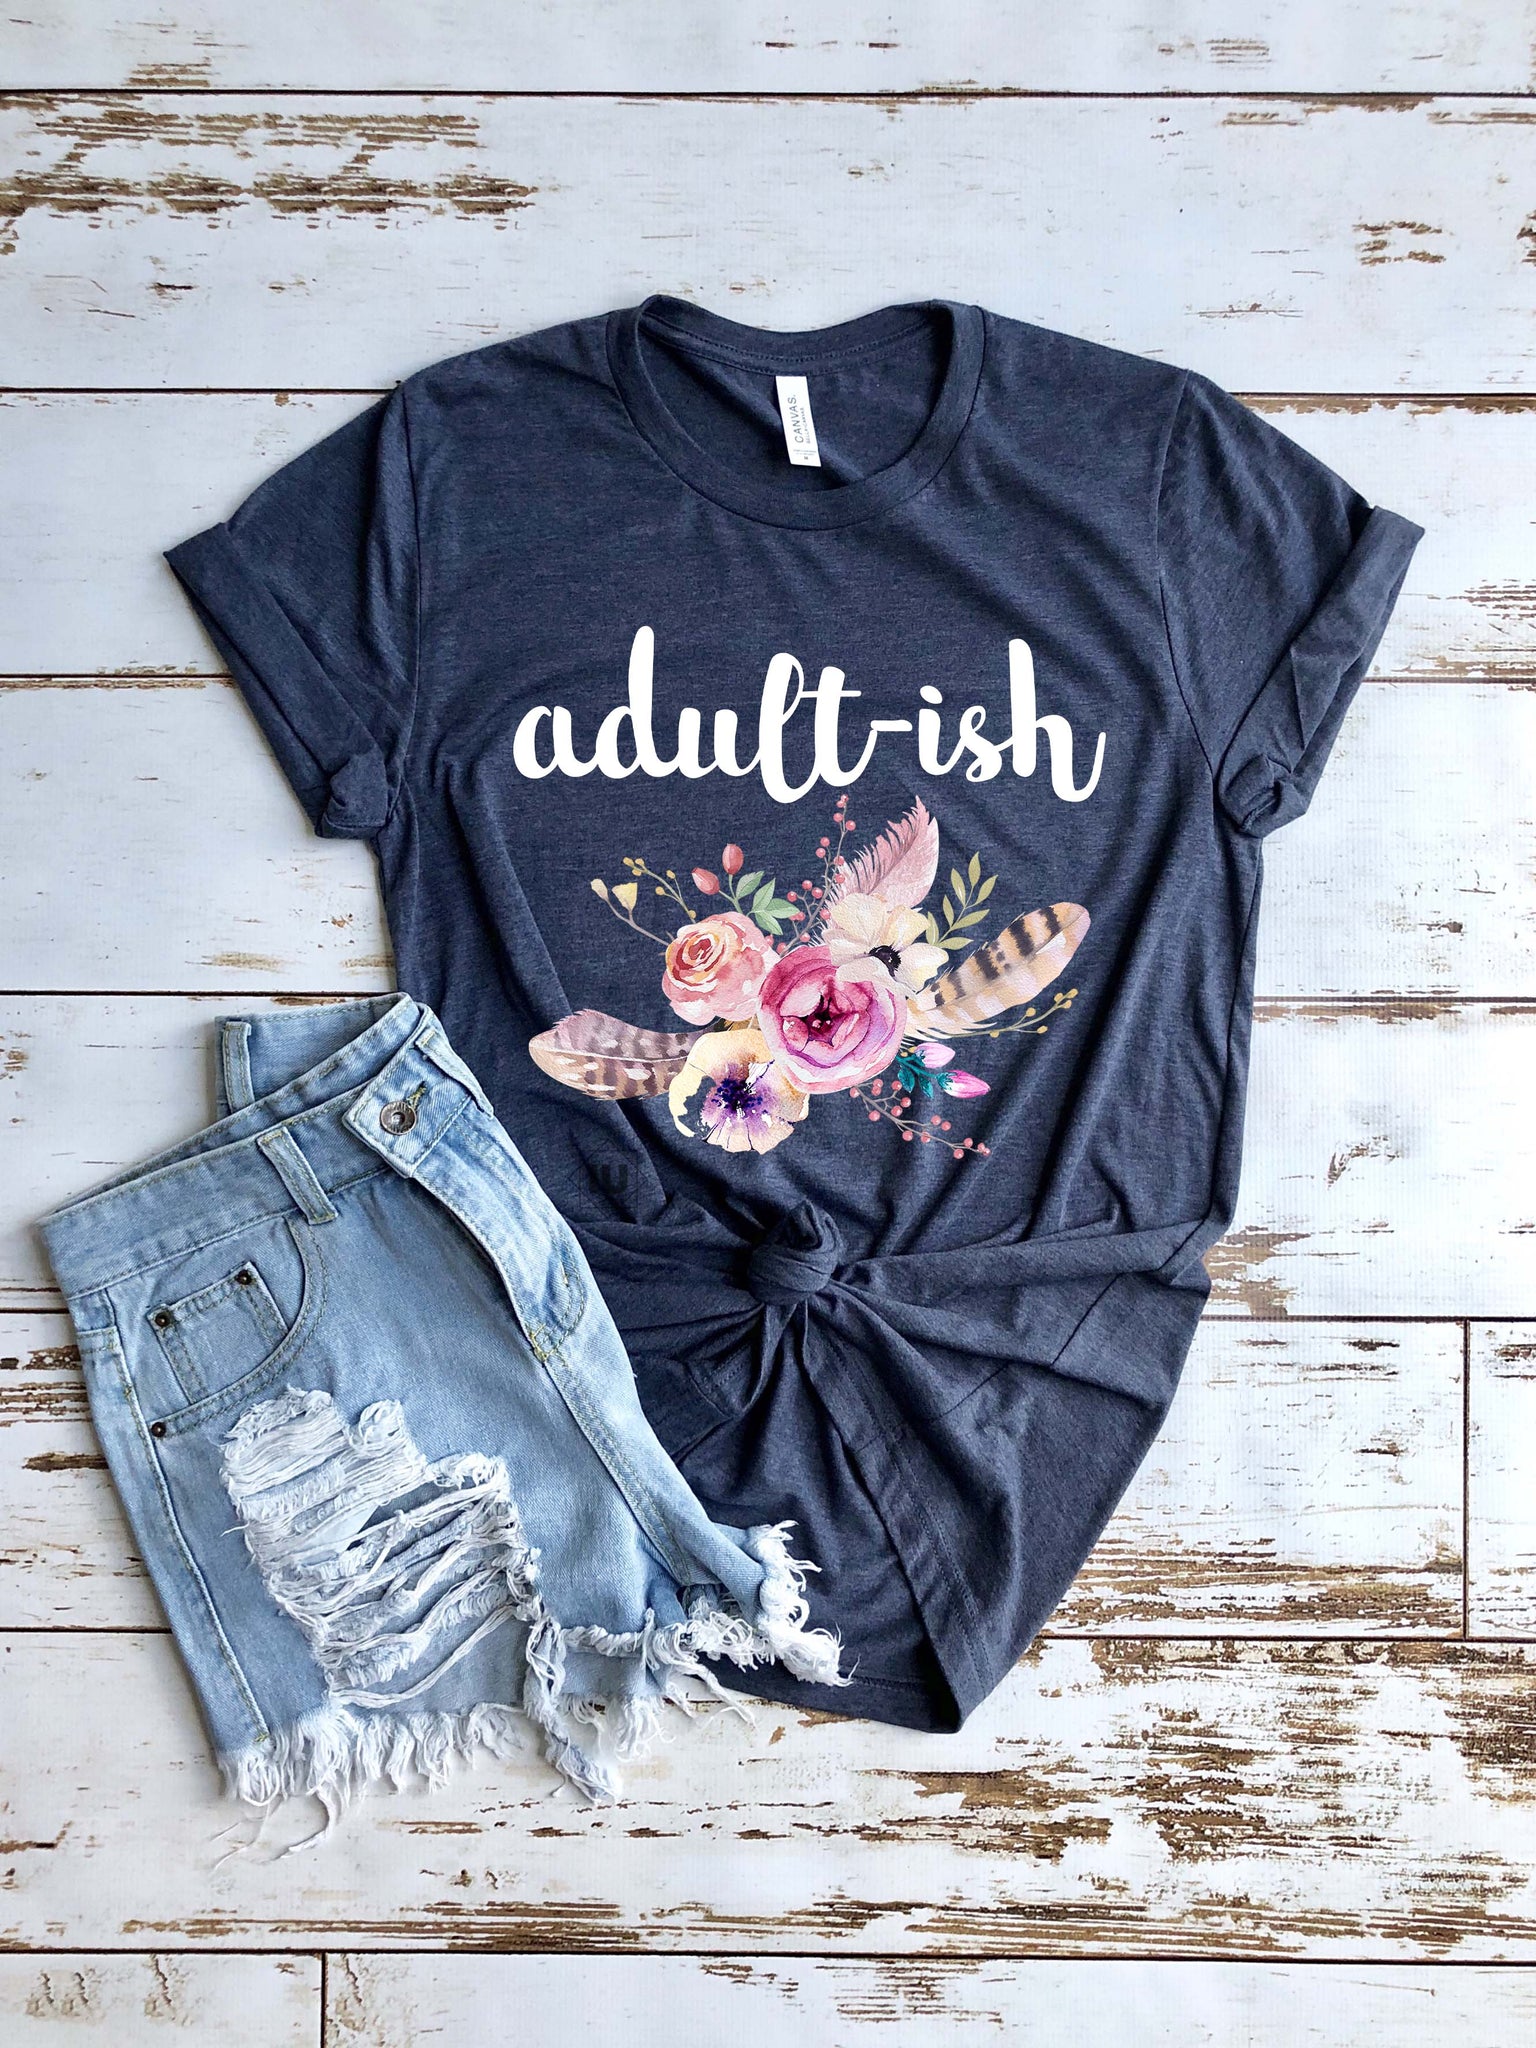 Adultish | Wholesale